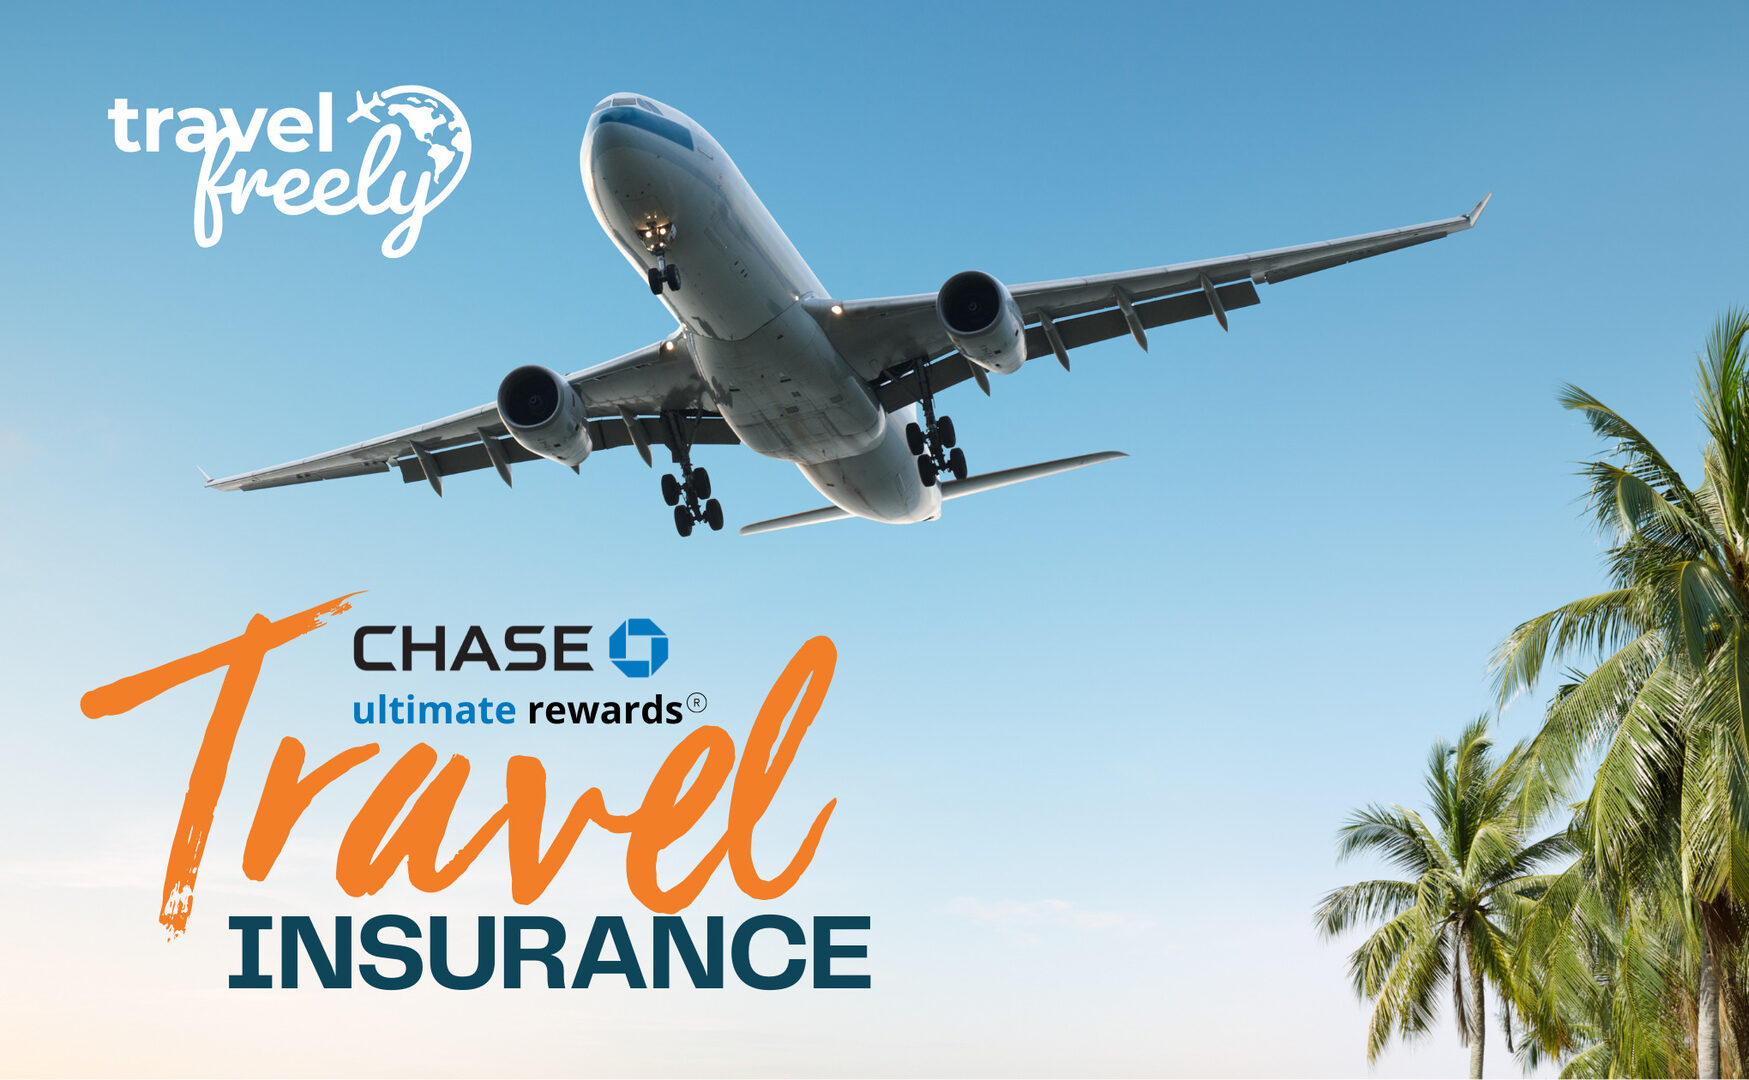 chase cc travel insurance